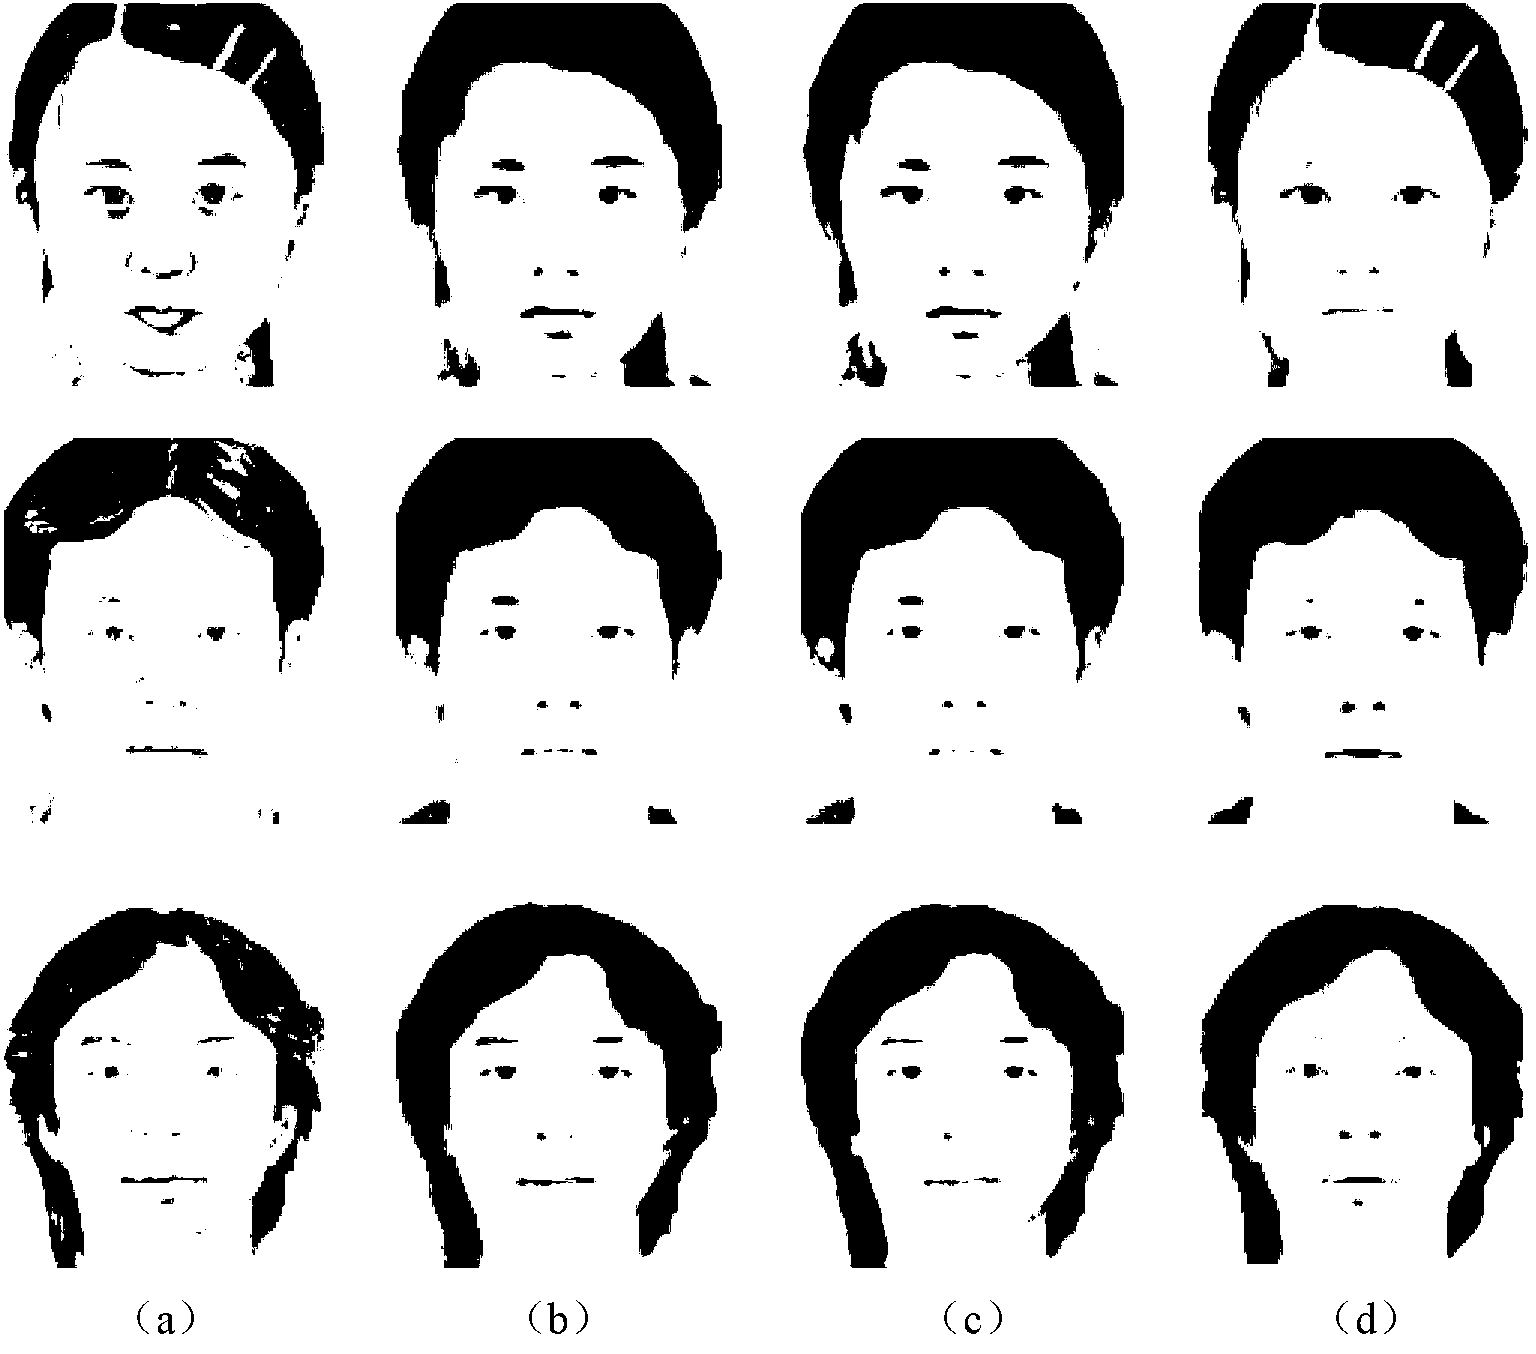 Human face fake photo automatic combining and modifying method based on portrayal